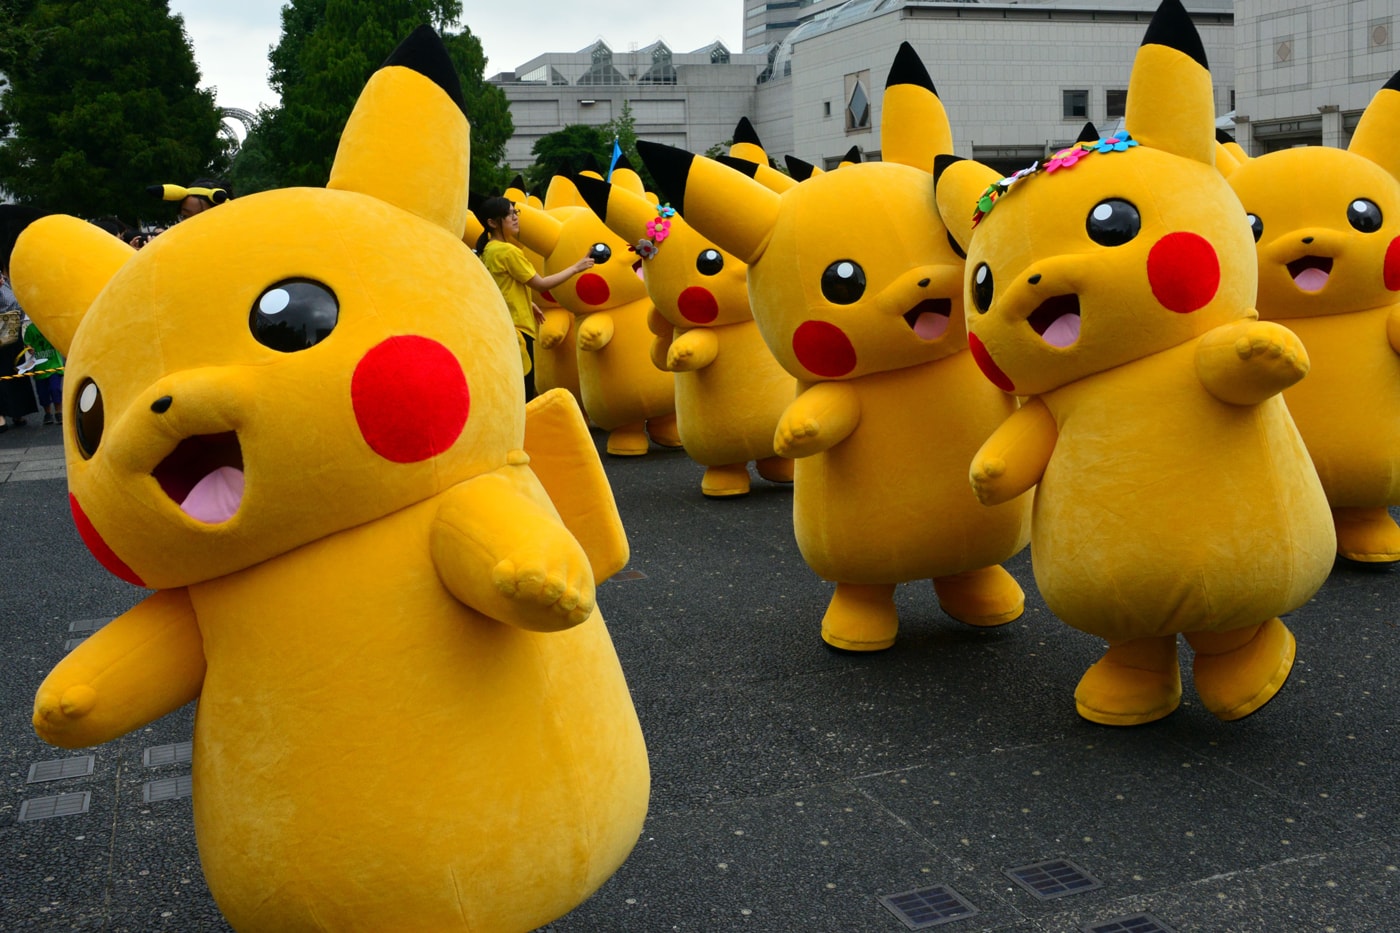 Pokémon company google vote poll of the year gaming games cartoon anime day 2020 1996 Pikachu Bulbasaur Charizard Eevee